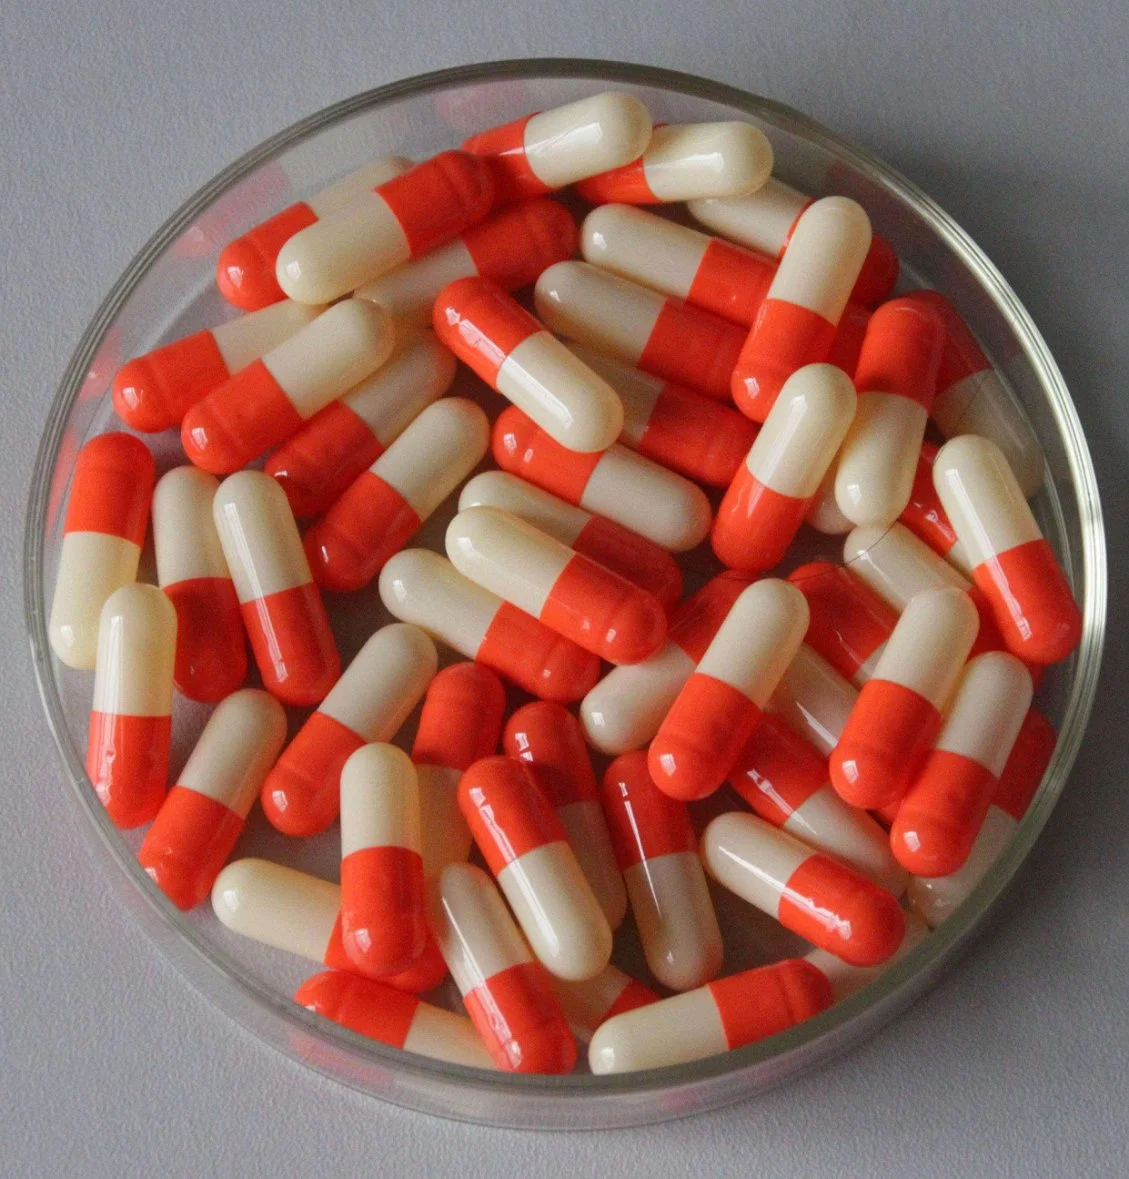 Veterinary Drug Oxytetracycline HCl Capsule, Tablets, 250mg, 500mg